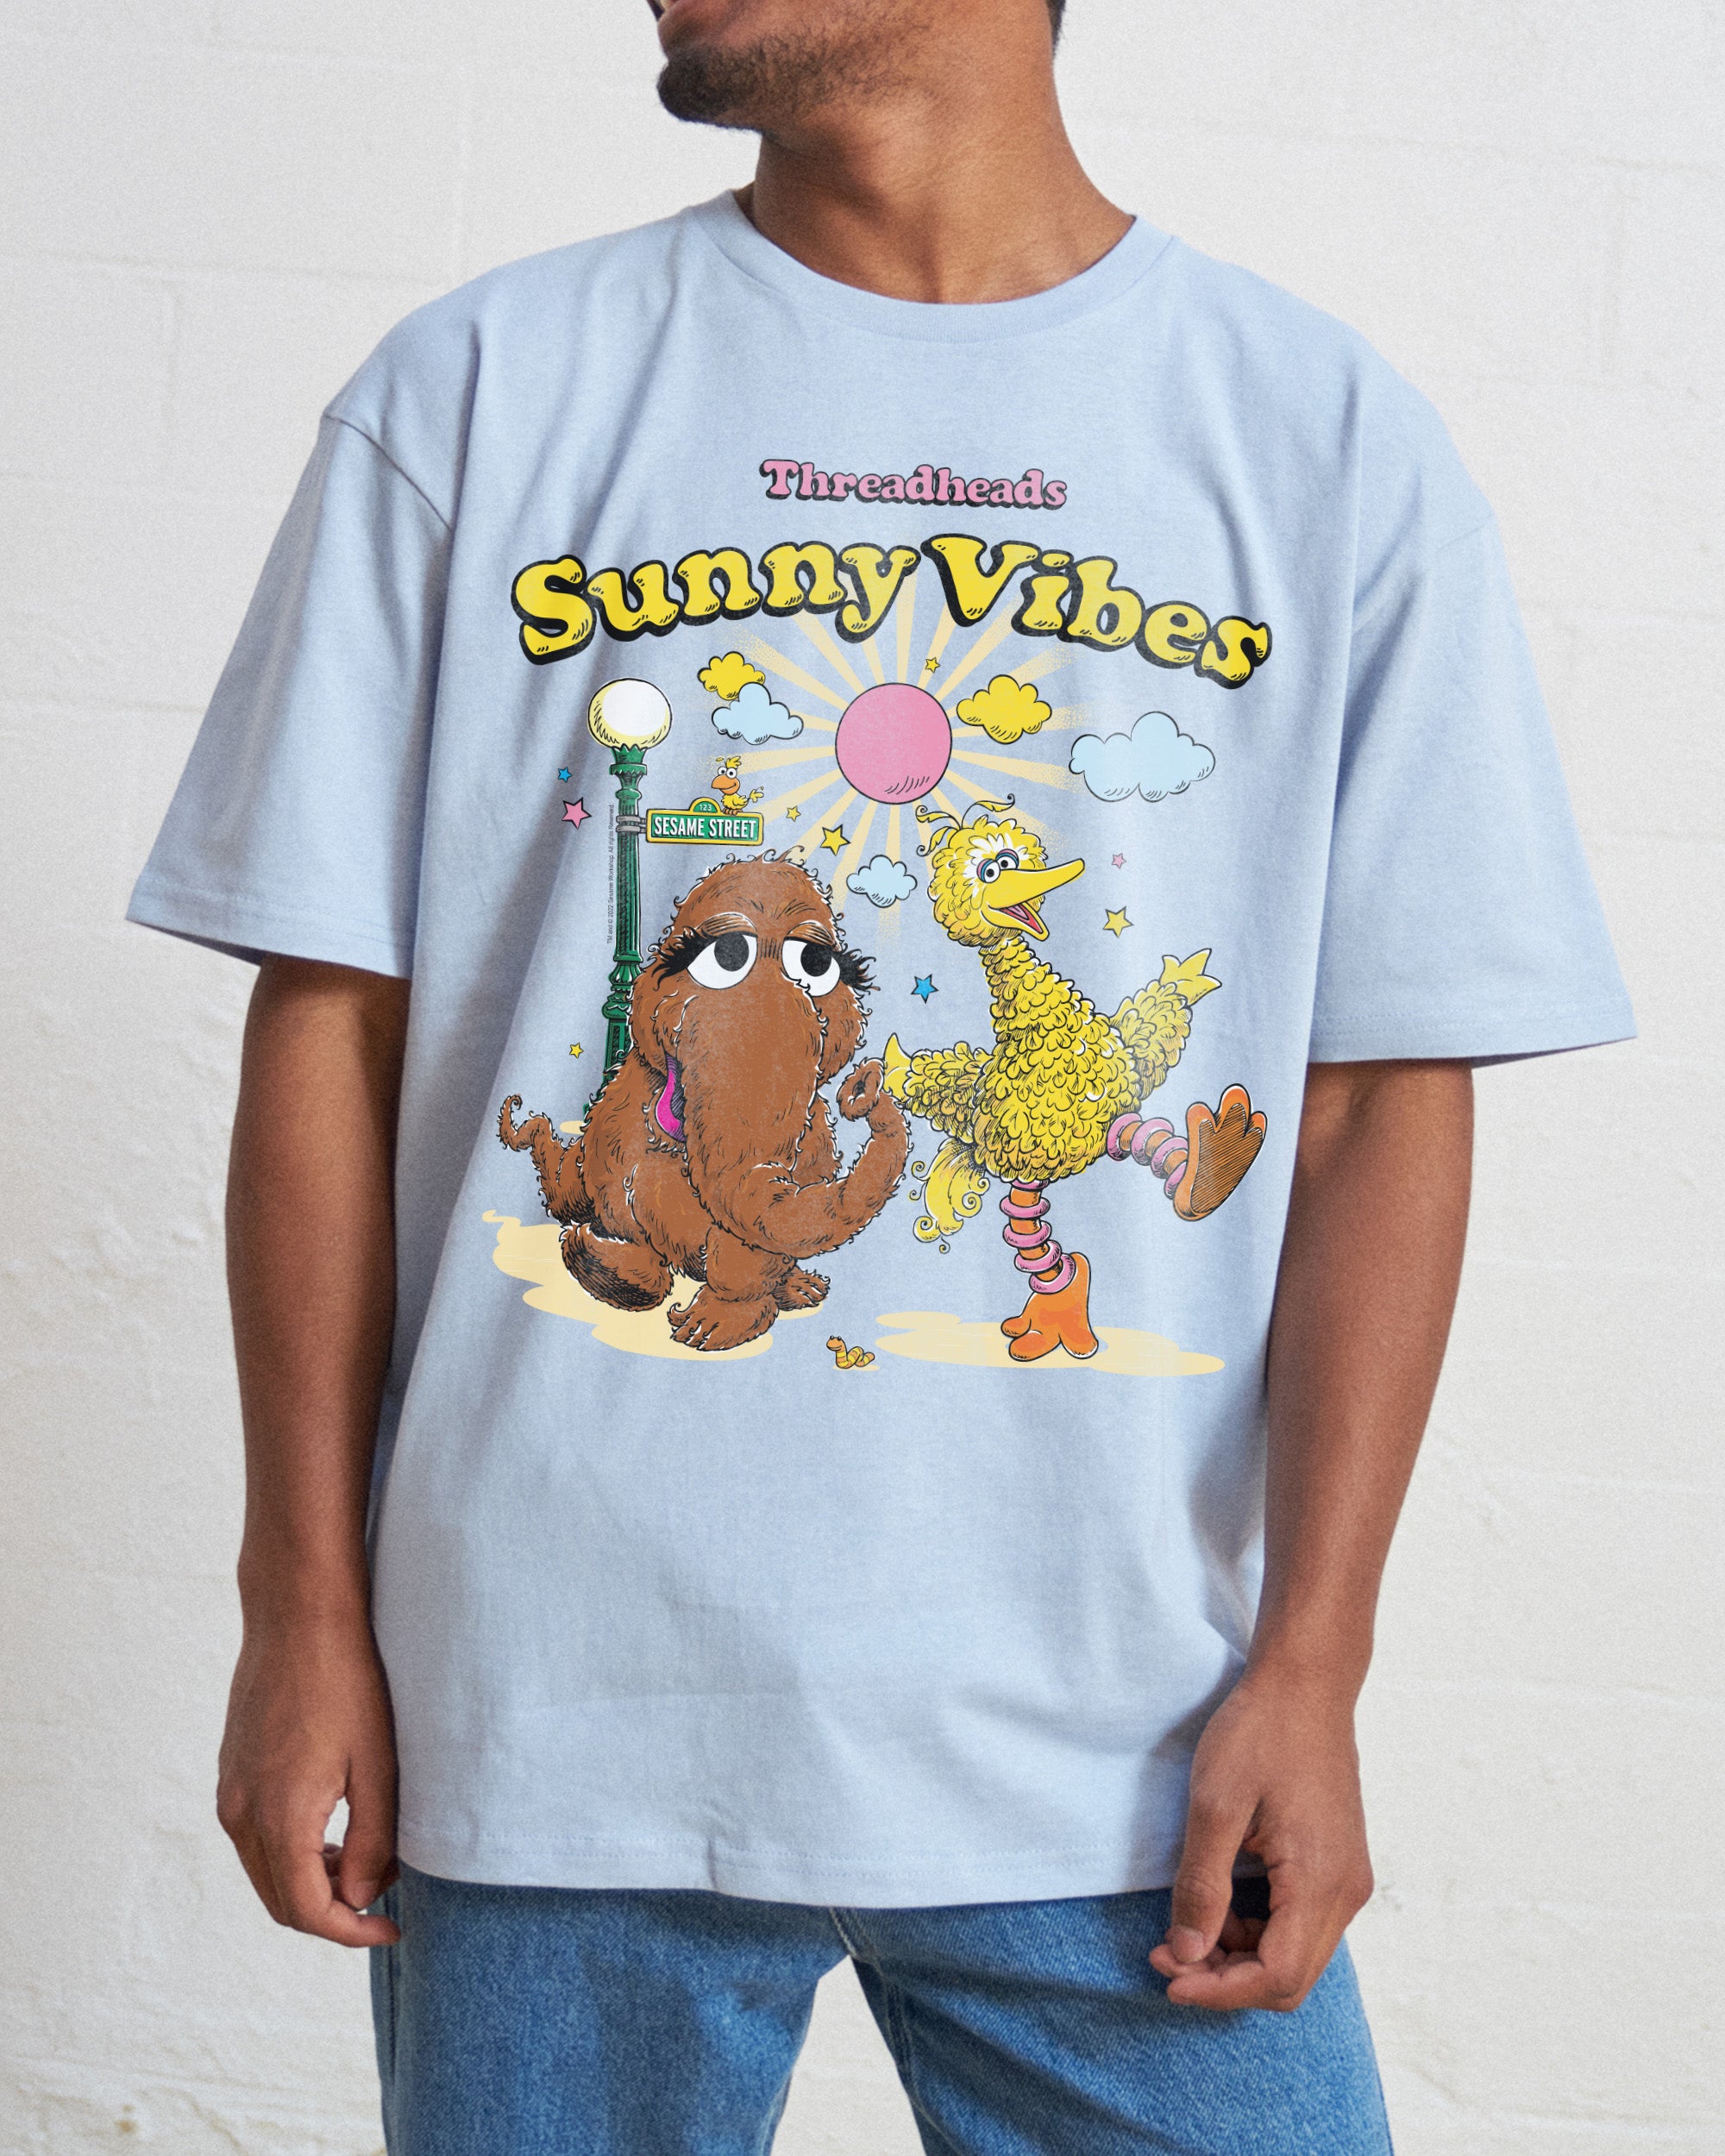 Sunny Vibes T-Shirt